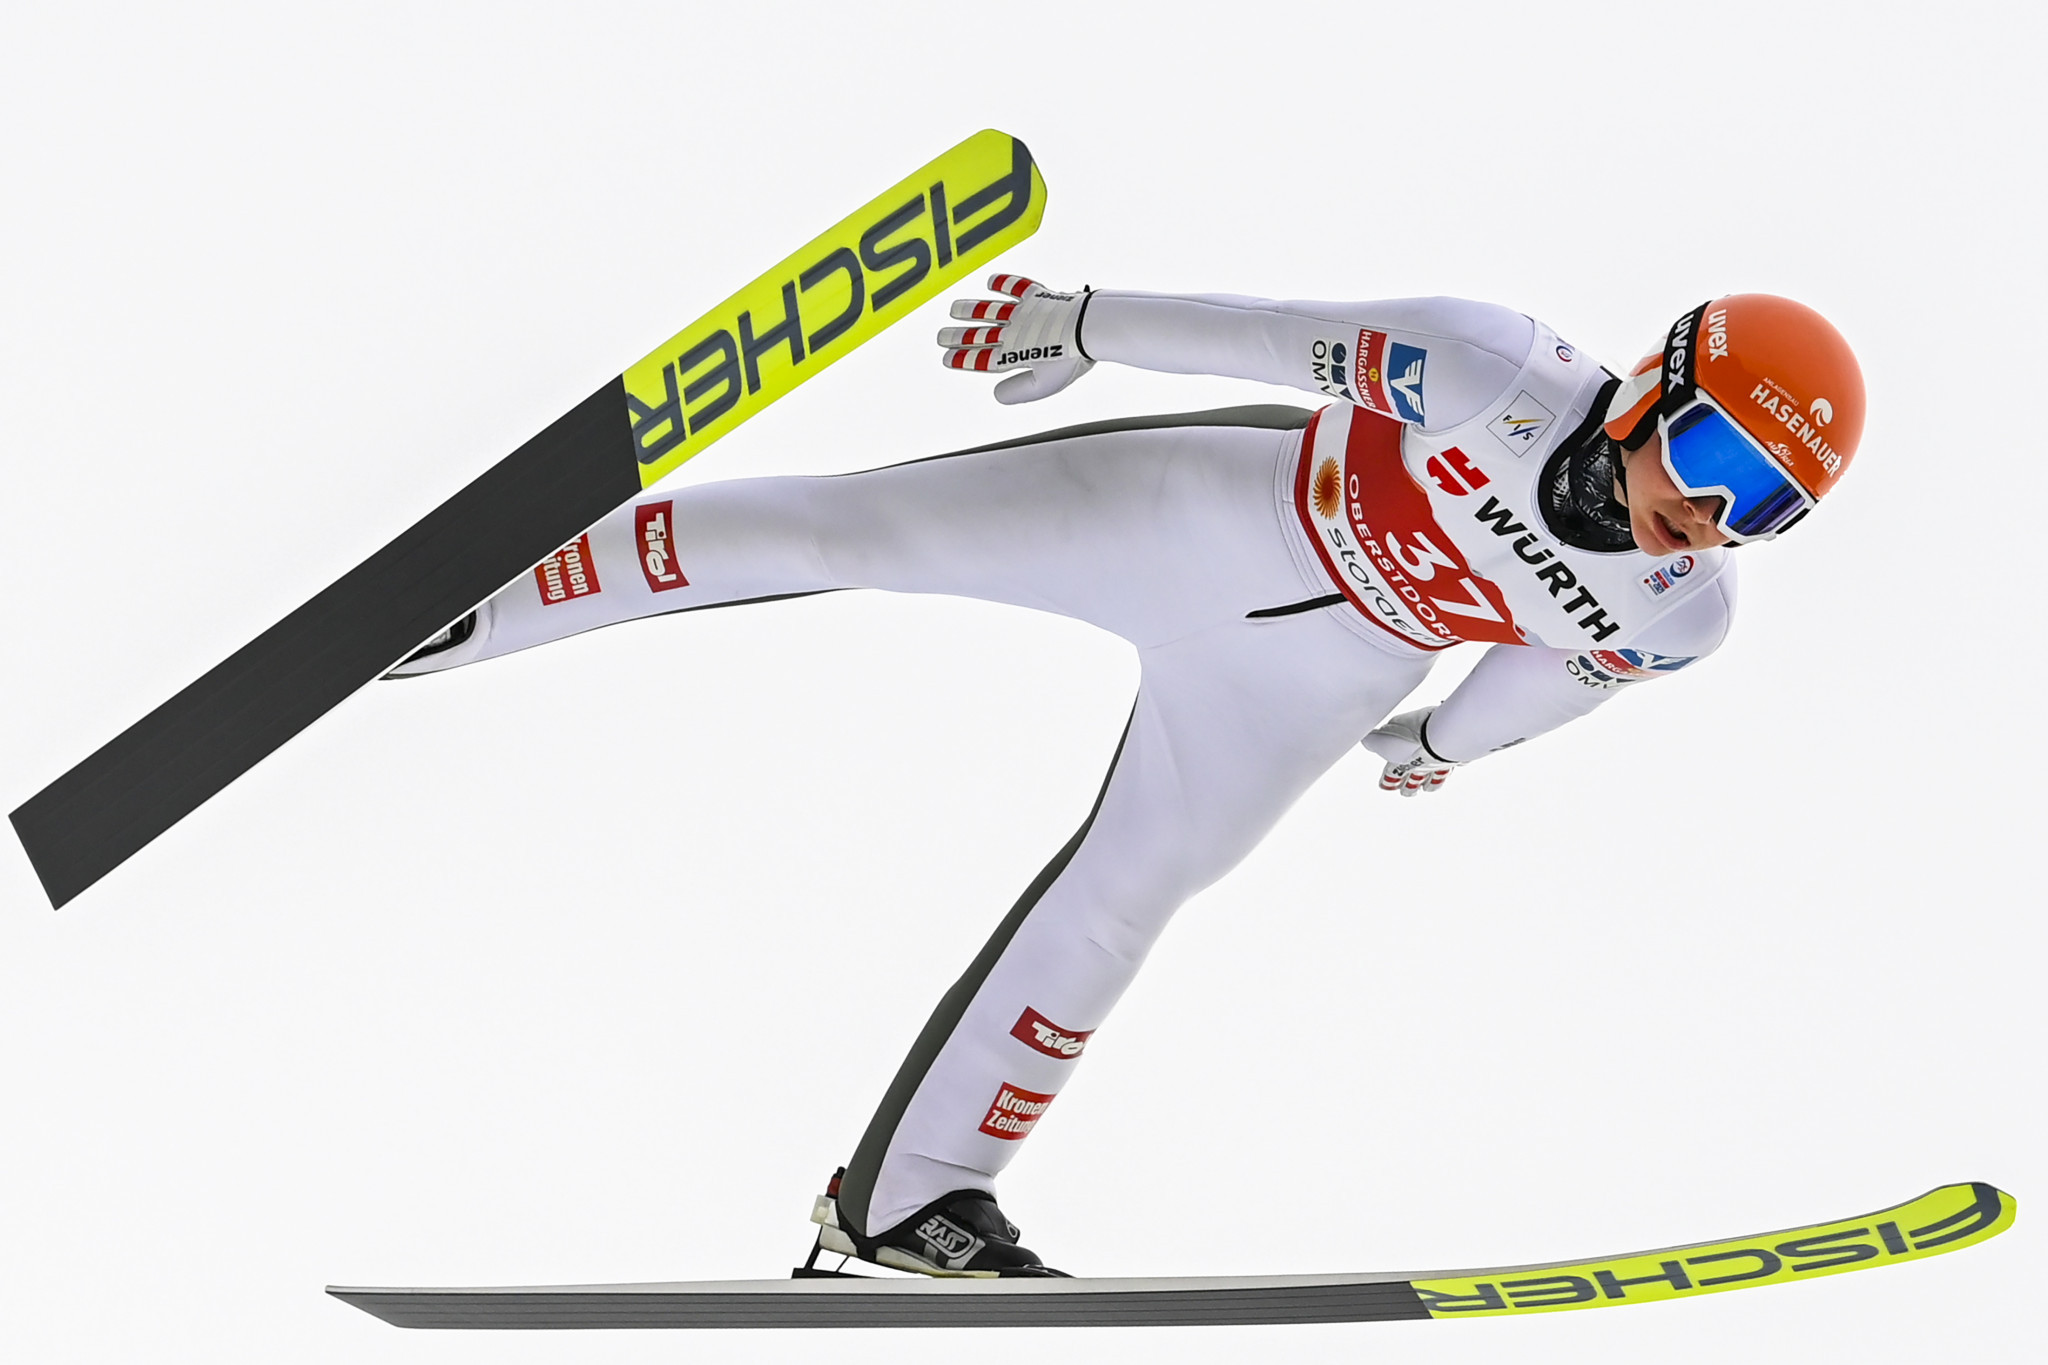 Kramer claims opening win of women's FIS Ski Jumping World Cup season to keep run going